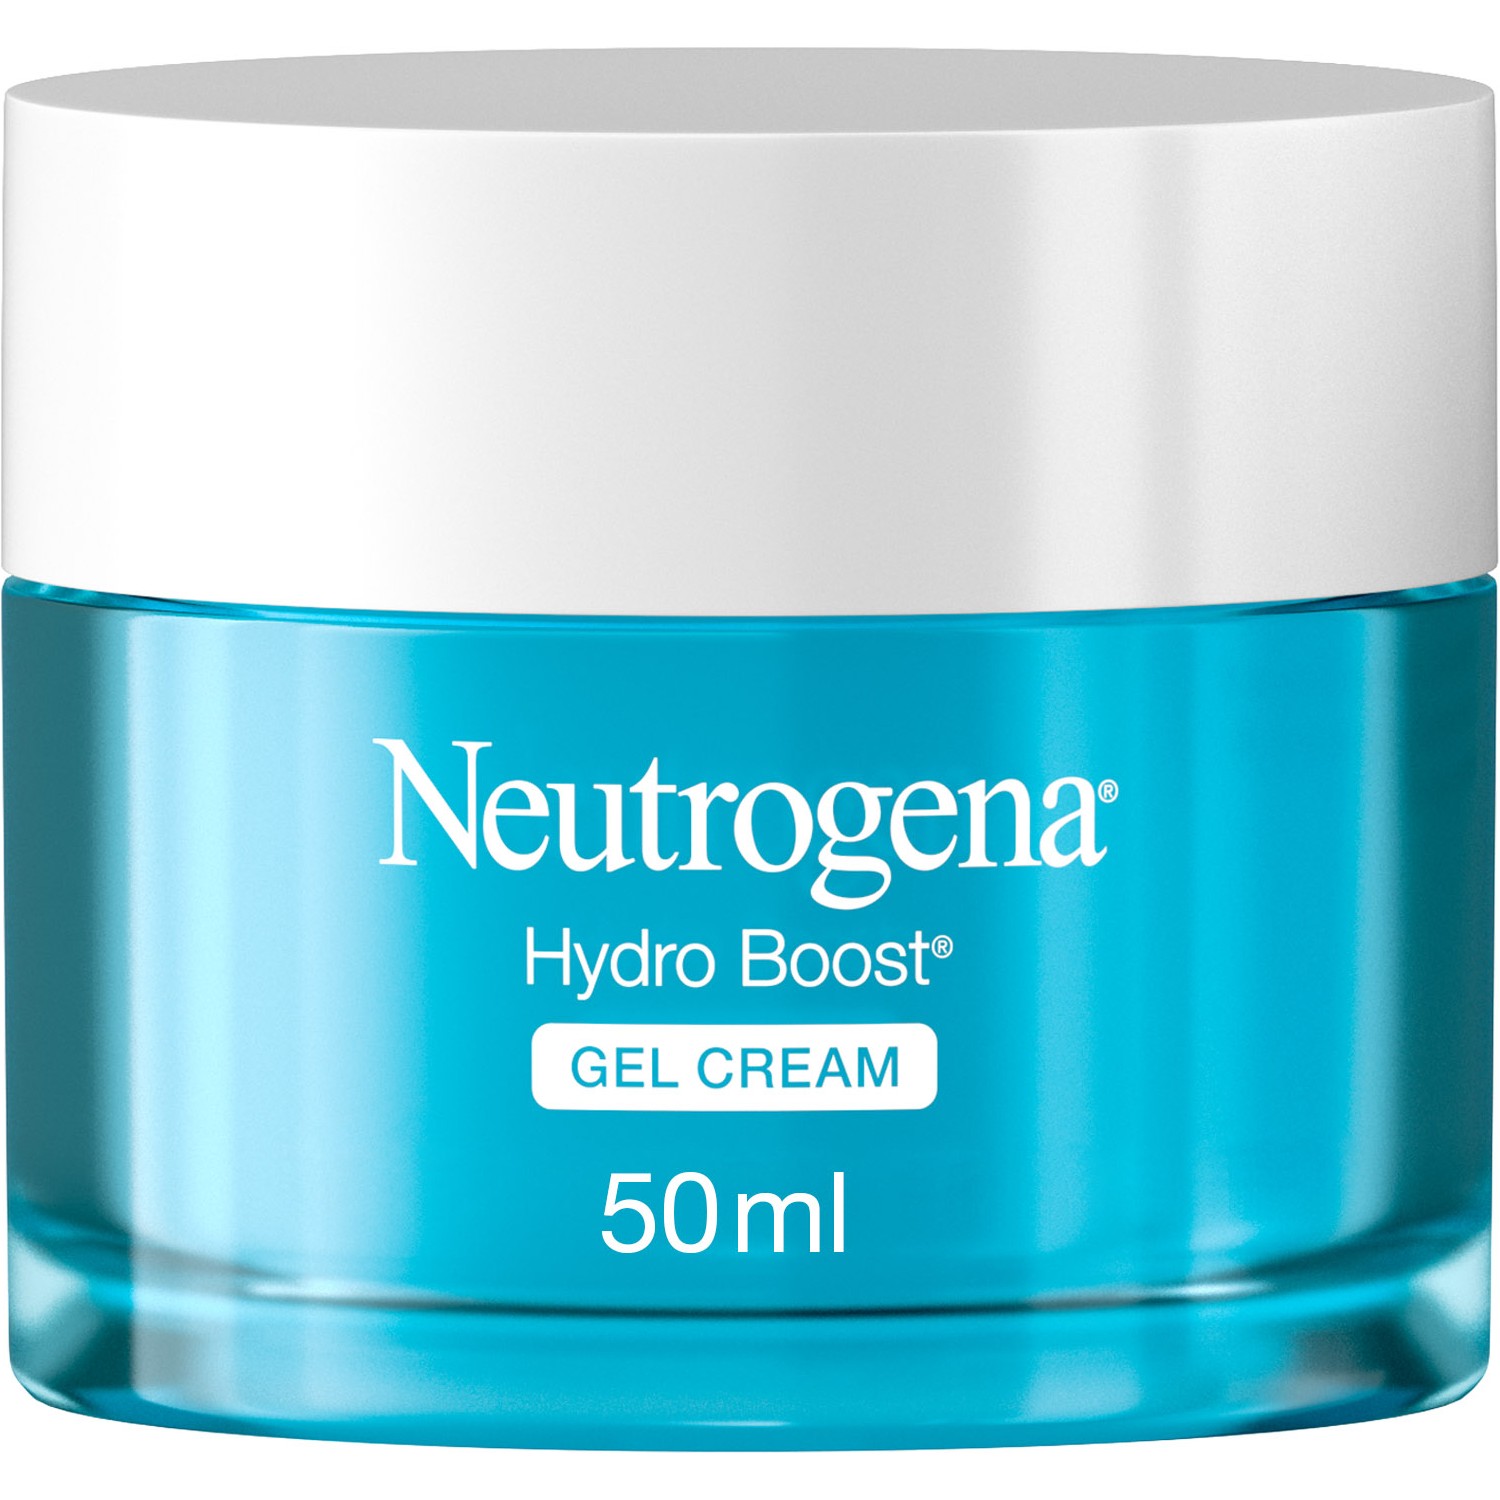 Крем-гель Neutrogena Hydro Boost увлажняющий для сухой кожи, 50 мл